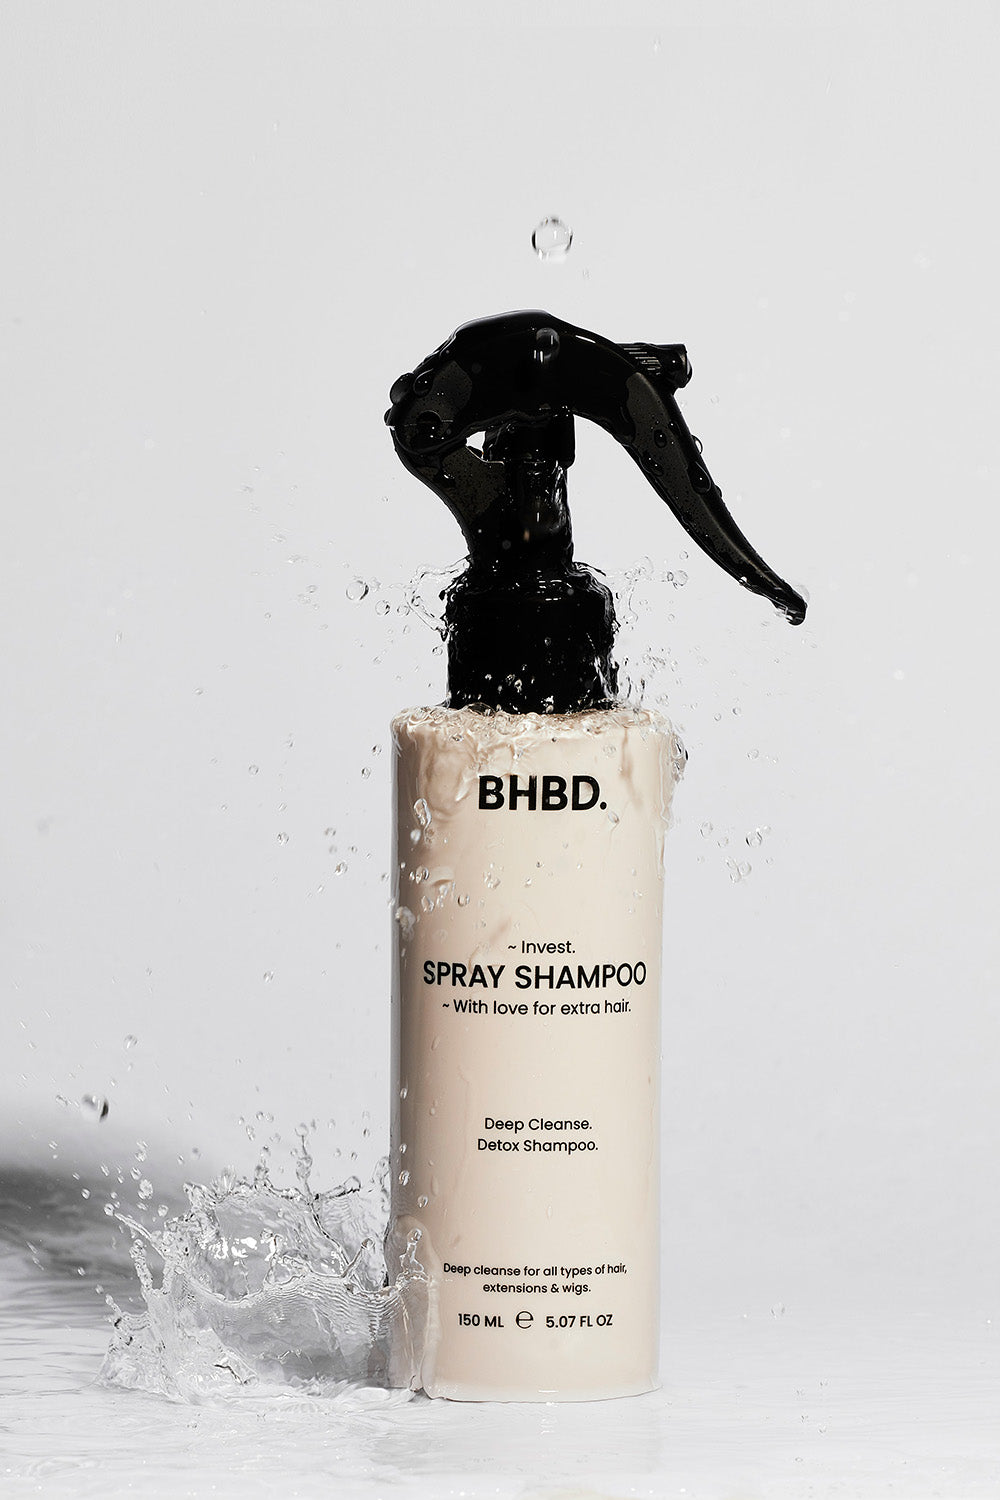 BHBD spray shampoo